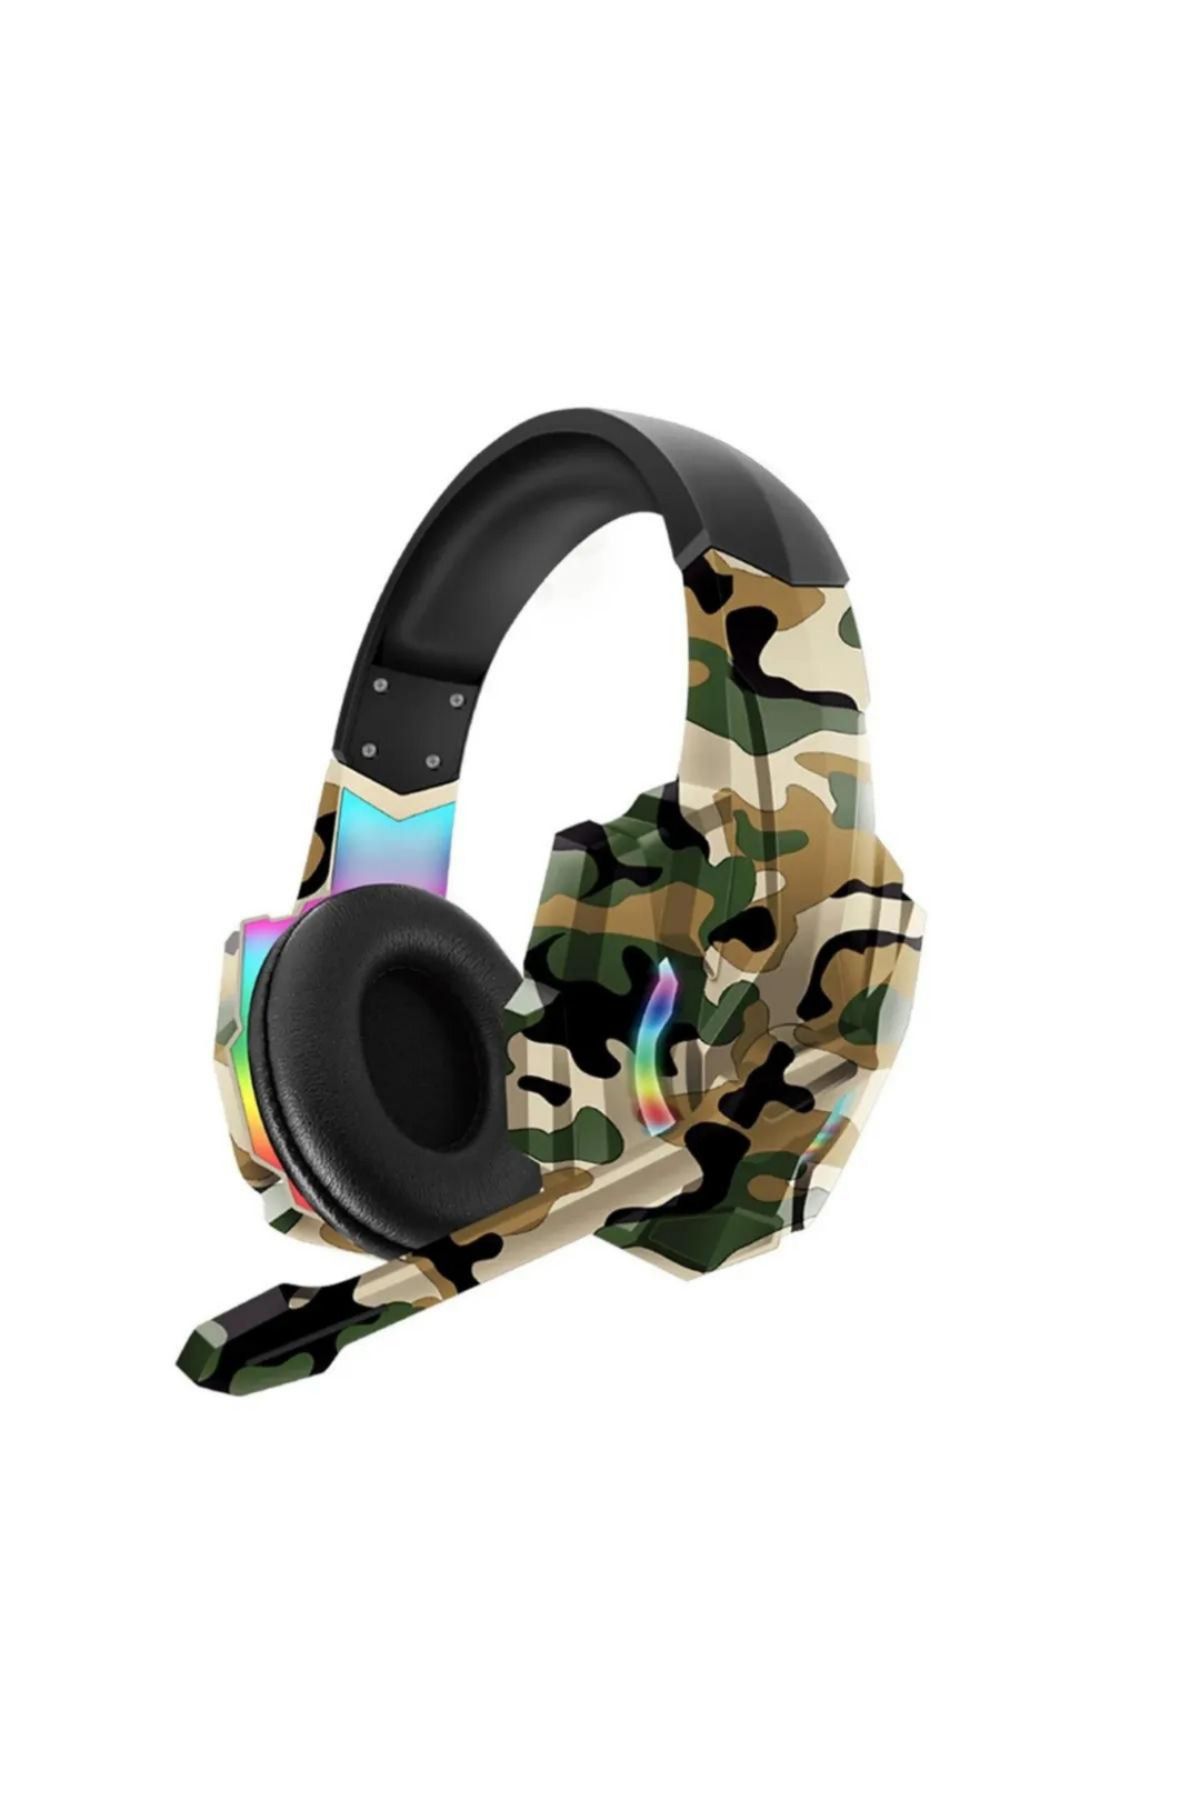 XİRA Gaming Oyuncu Mikrofonlu Kulaklık Kamuflaj Renkli Işıklı